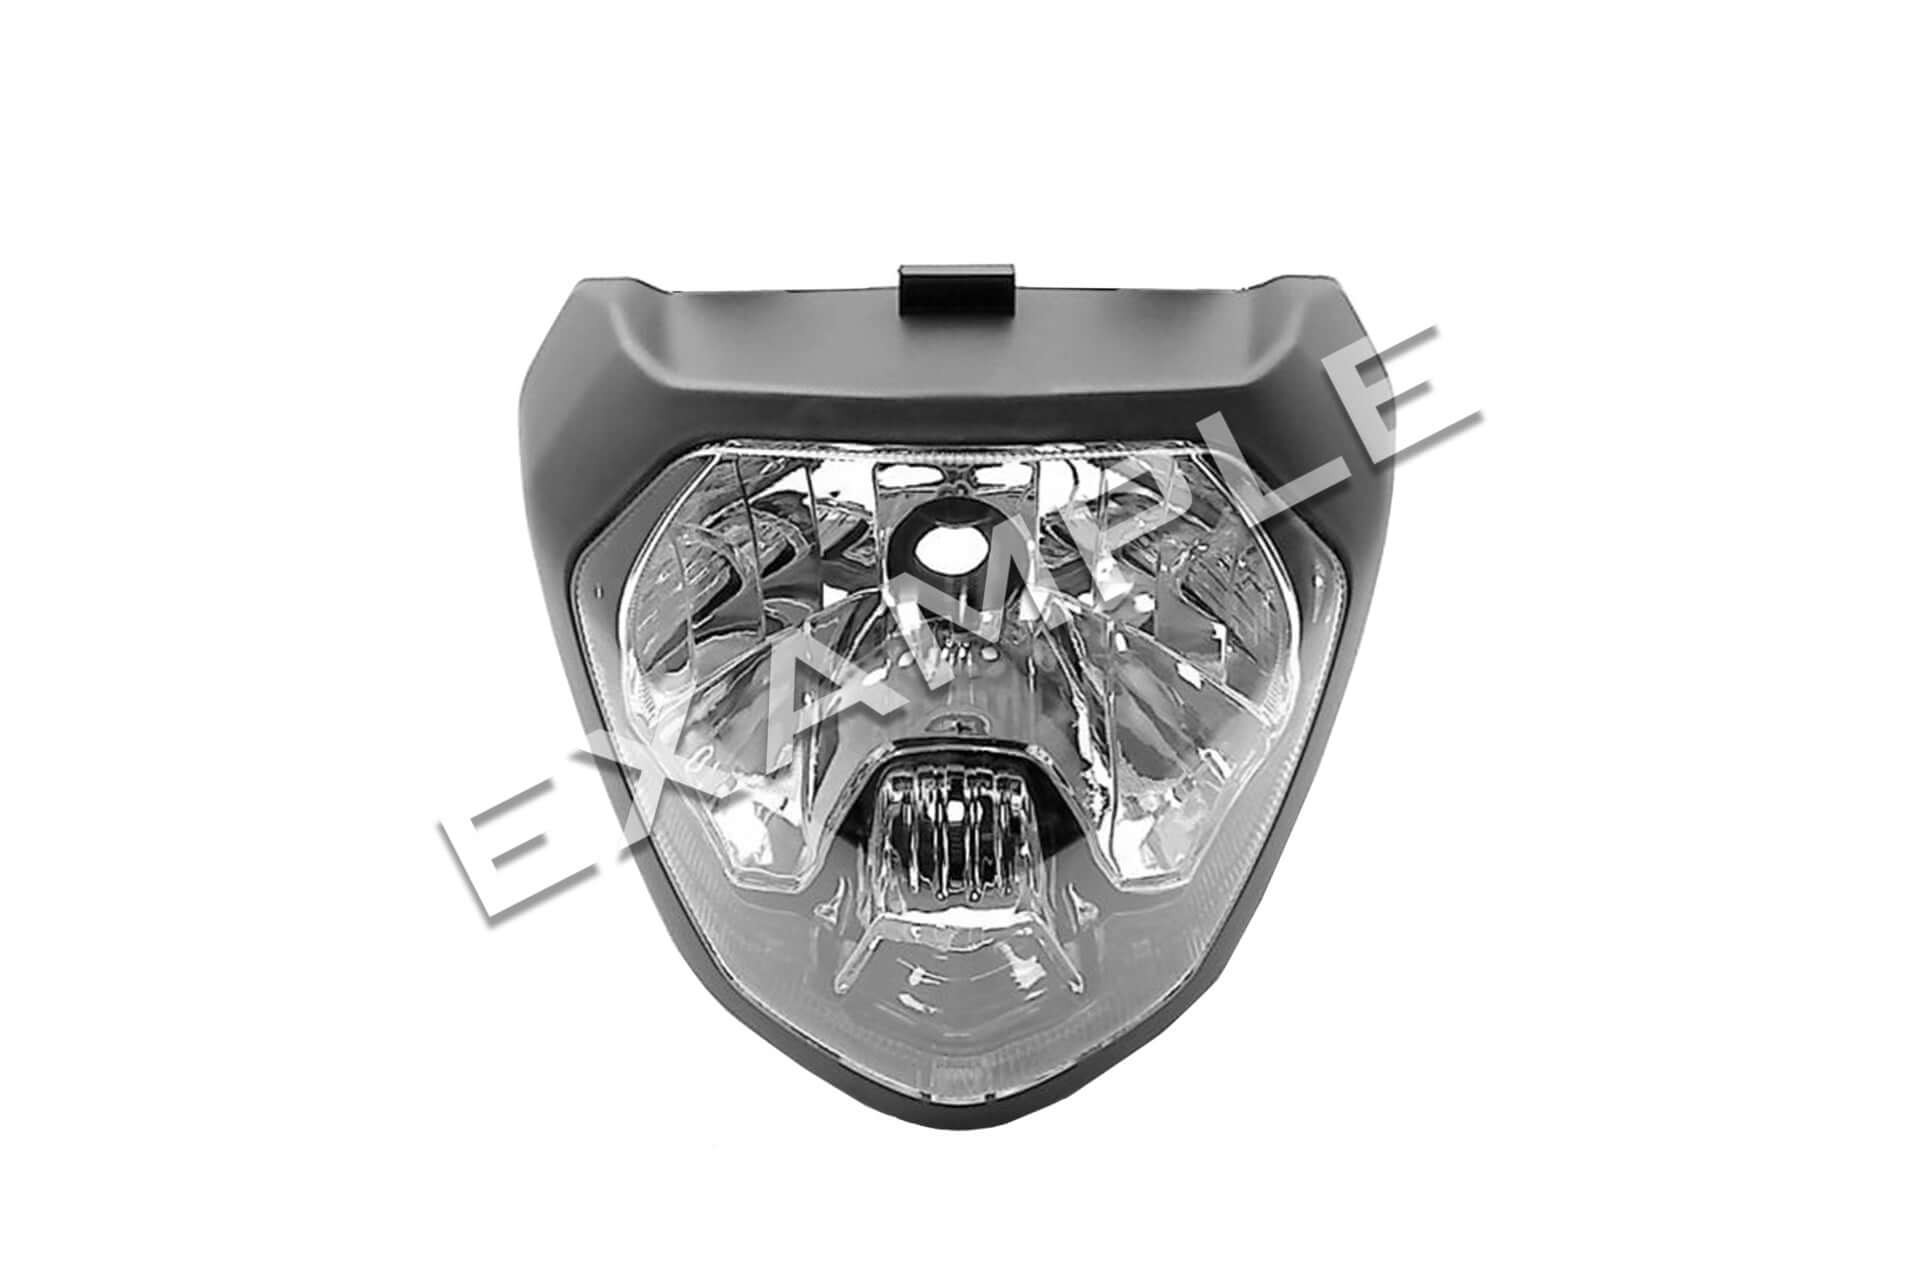 Yamaha MT-07 FZ-07 (2014-2017) HID bi-xenon headlight upgrade kit